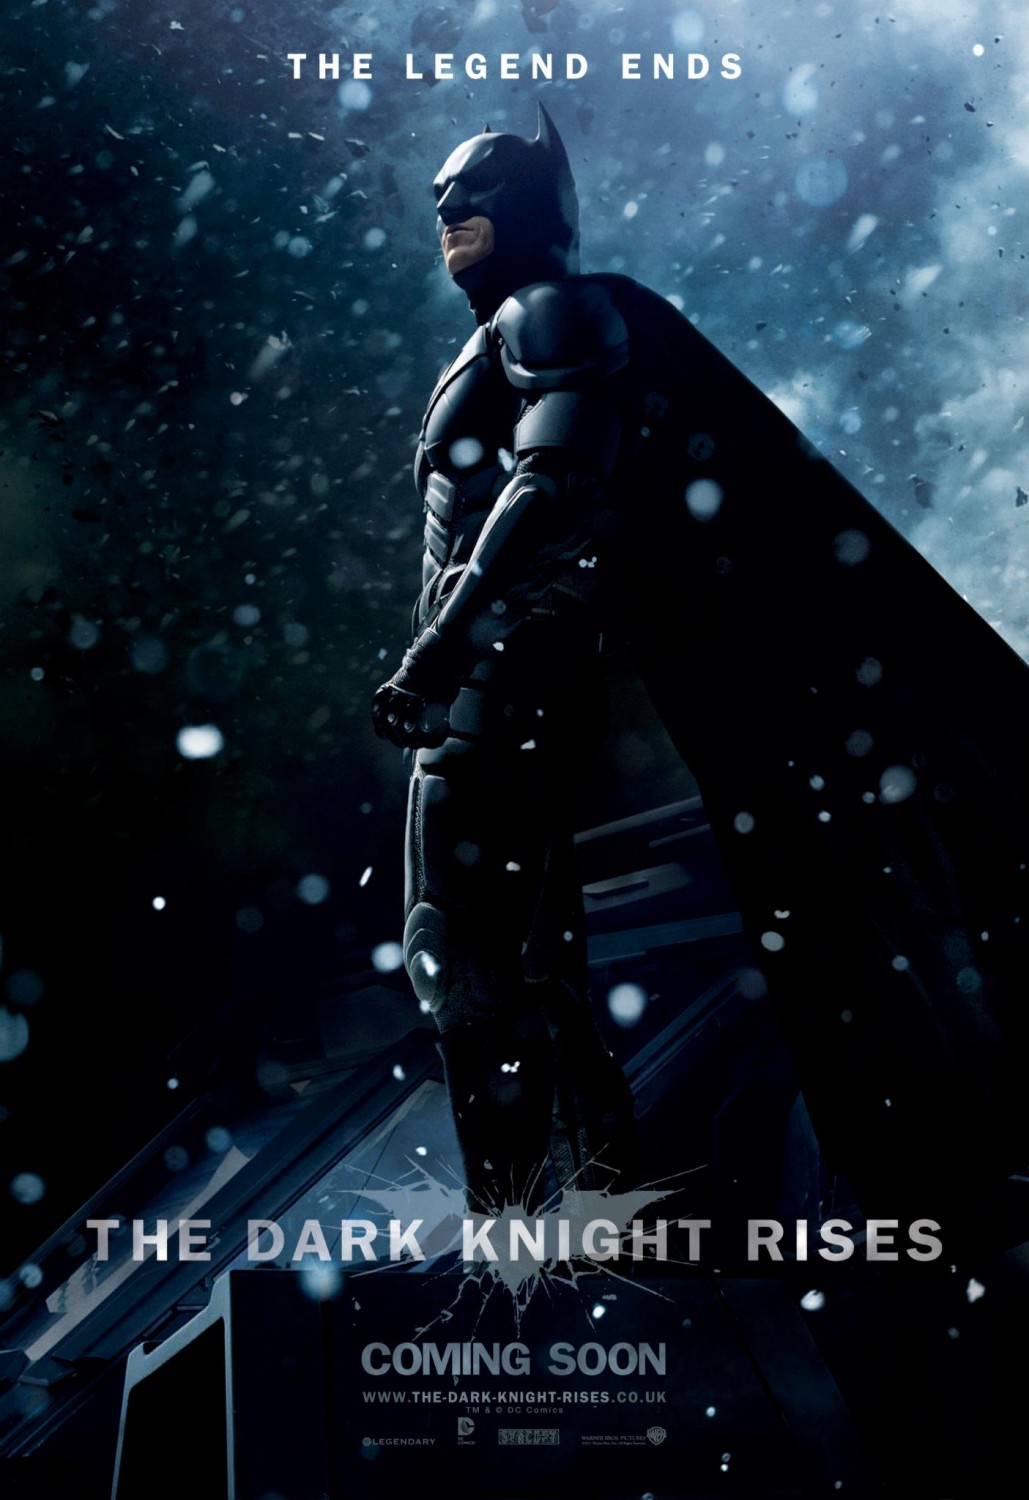 http://4.bp.blogspot.com/-swXBJgmZ19E/UOi6sehHwpI/AAAAAAAADoA/Ynh1yeGt26M/s1600/new-uk-dark-knight-rises-poster-batman.jpg